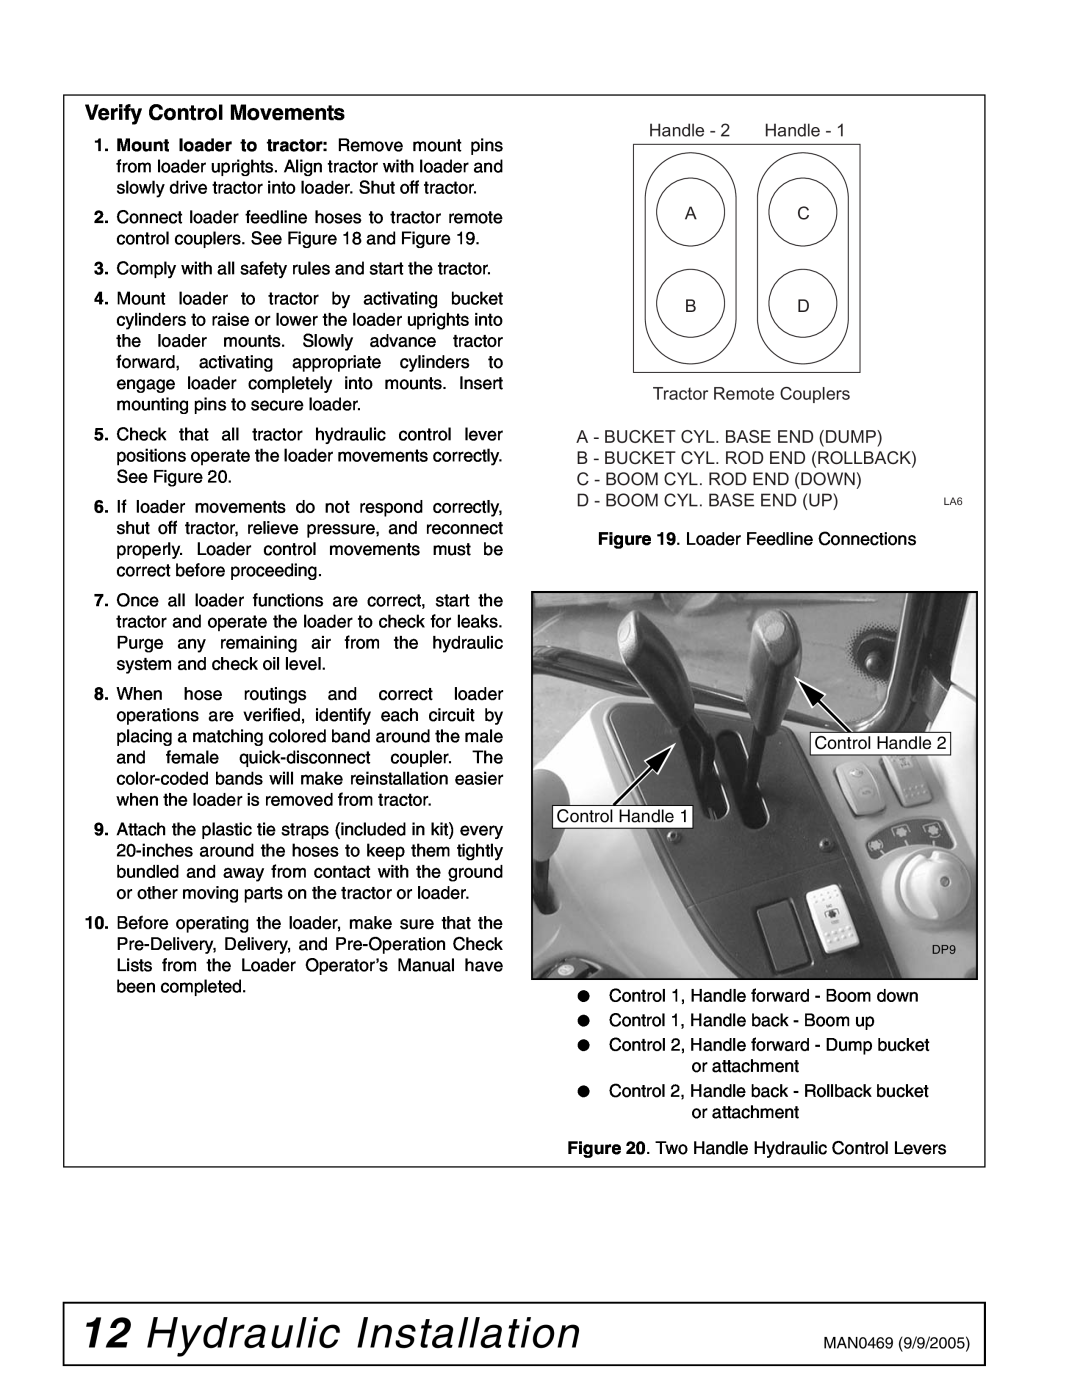 Woods Equipment 211822 installation manual Hydraulic Installation, Verify Control Movements, Handle - 2 Handle - AC BD 